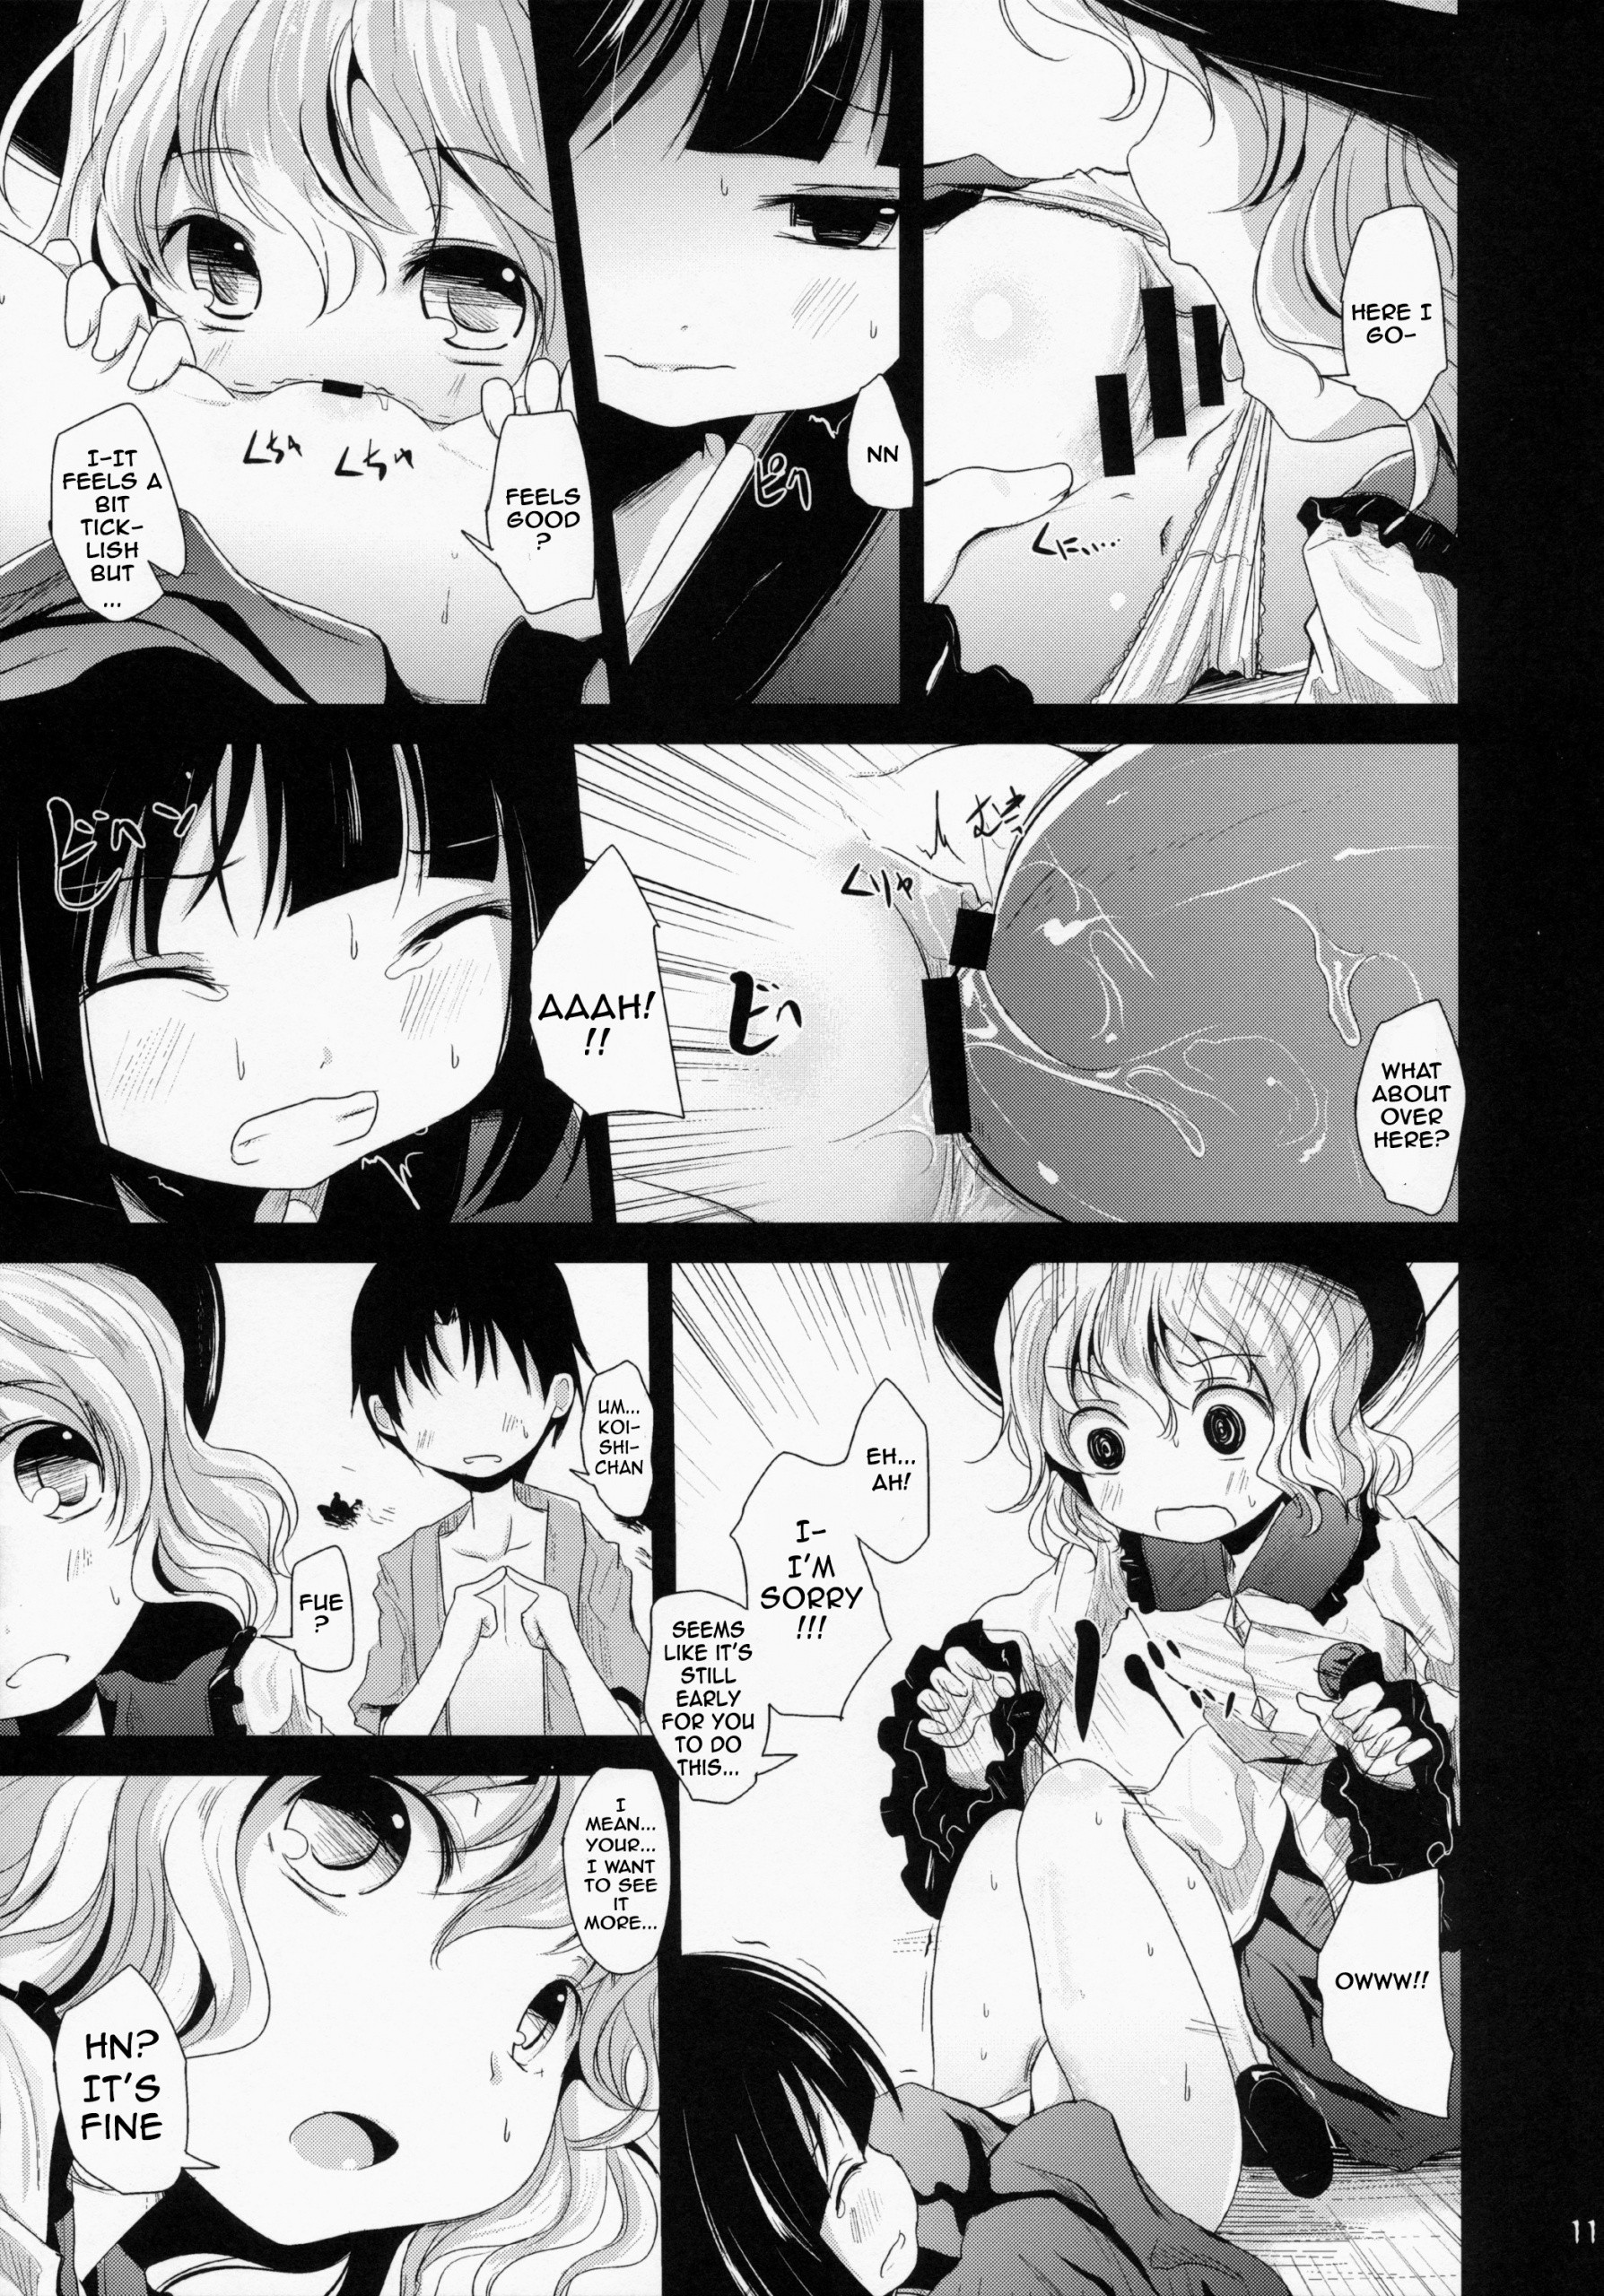 Koishi-Chan Let's Play hentai manga picture 10